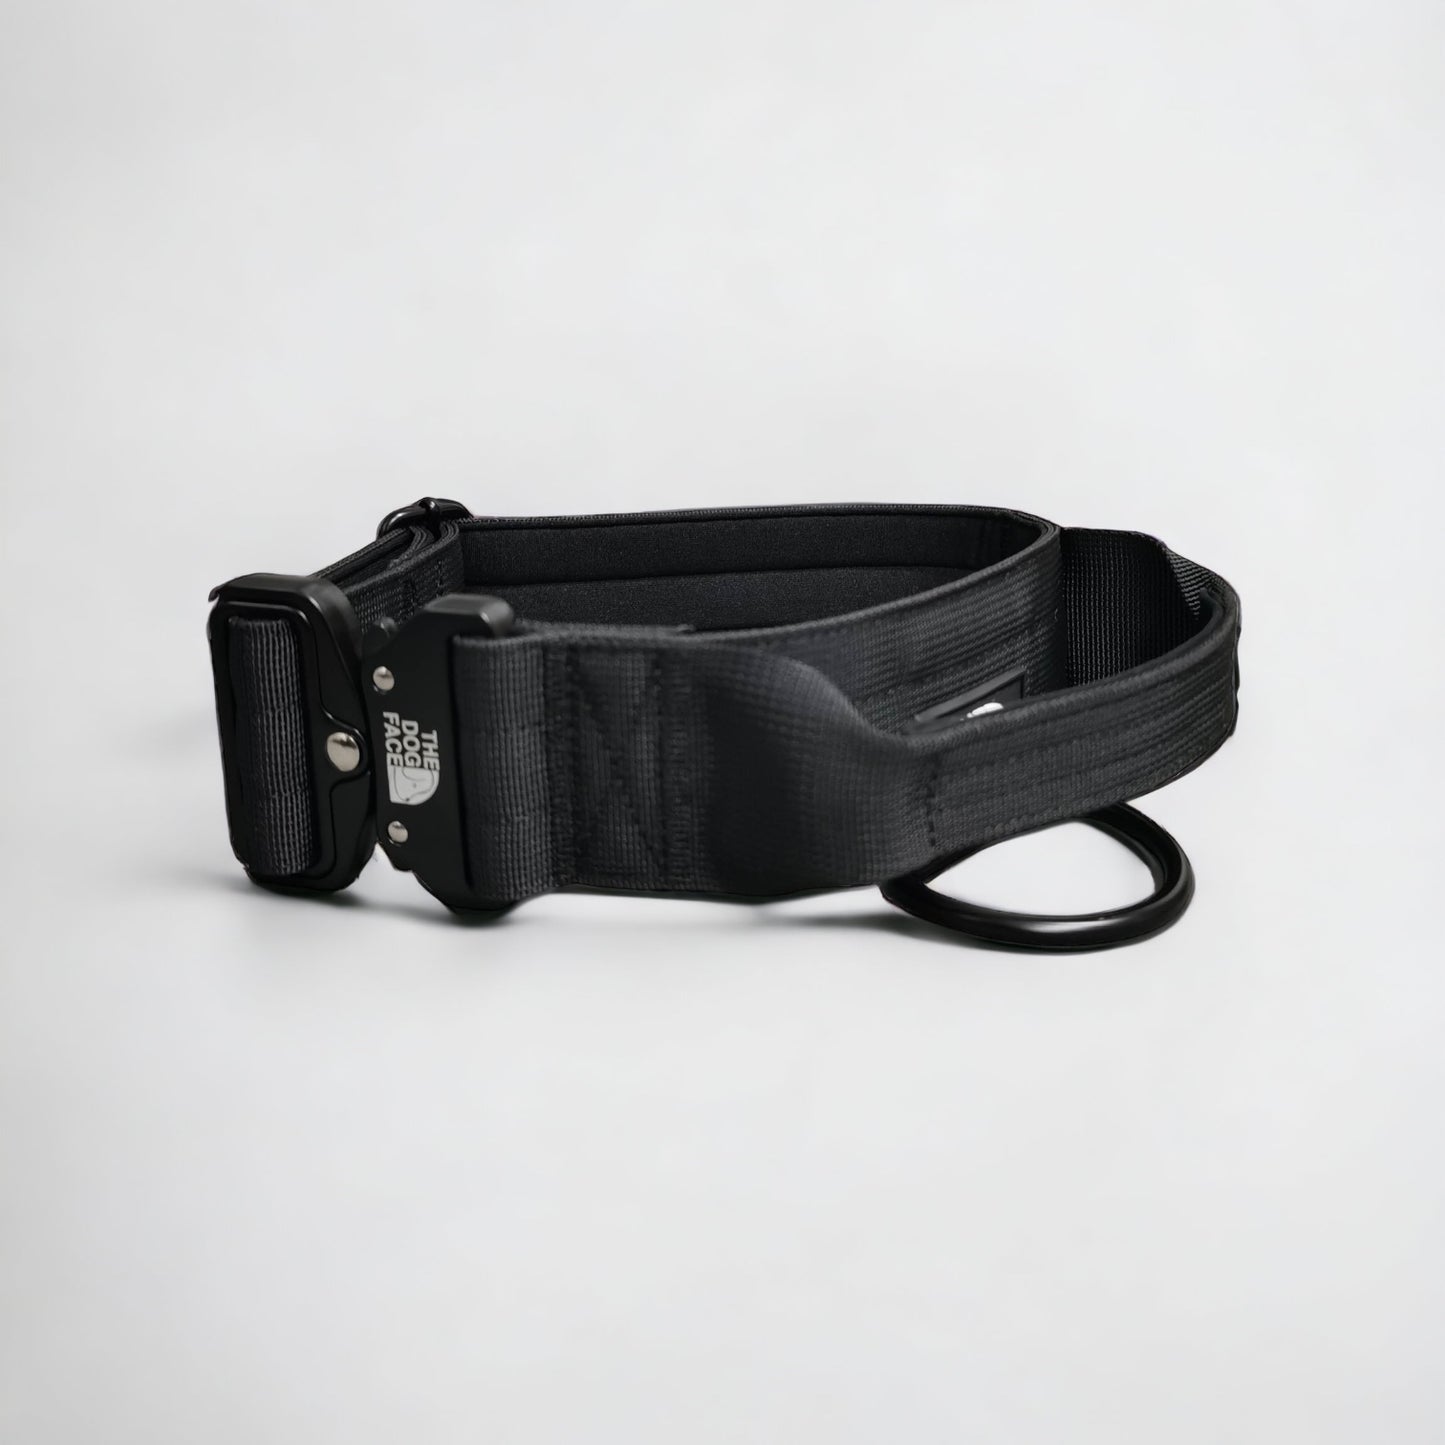 'Superior' Tactical Dog Collar - Black